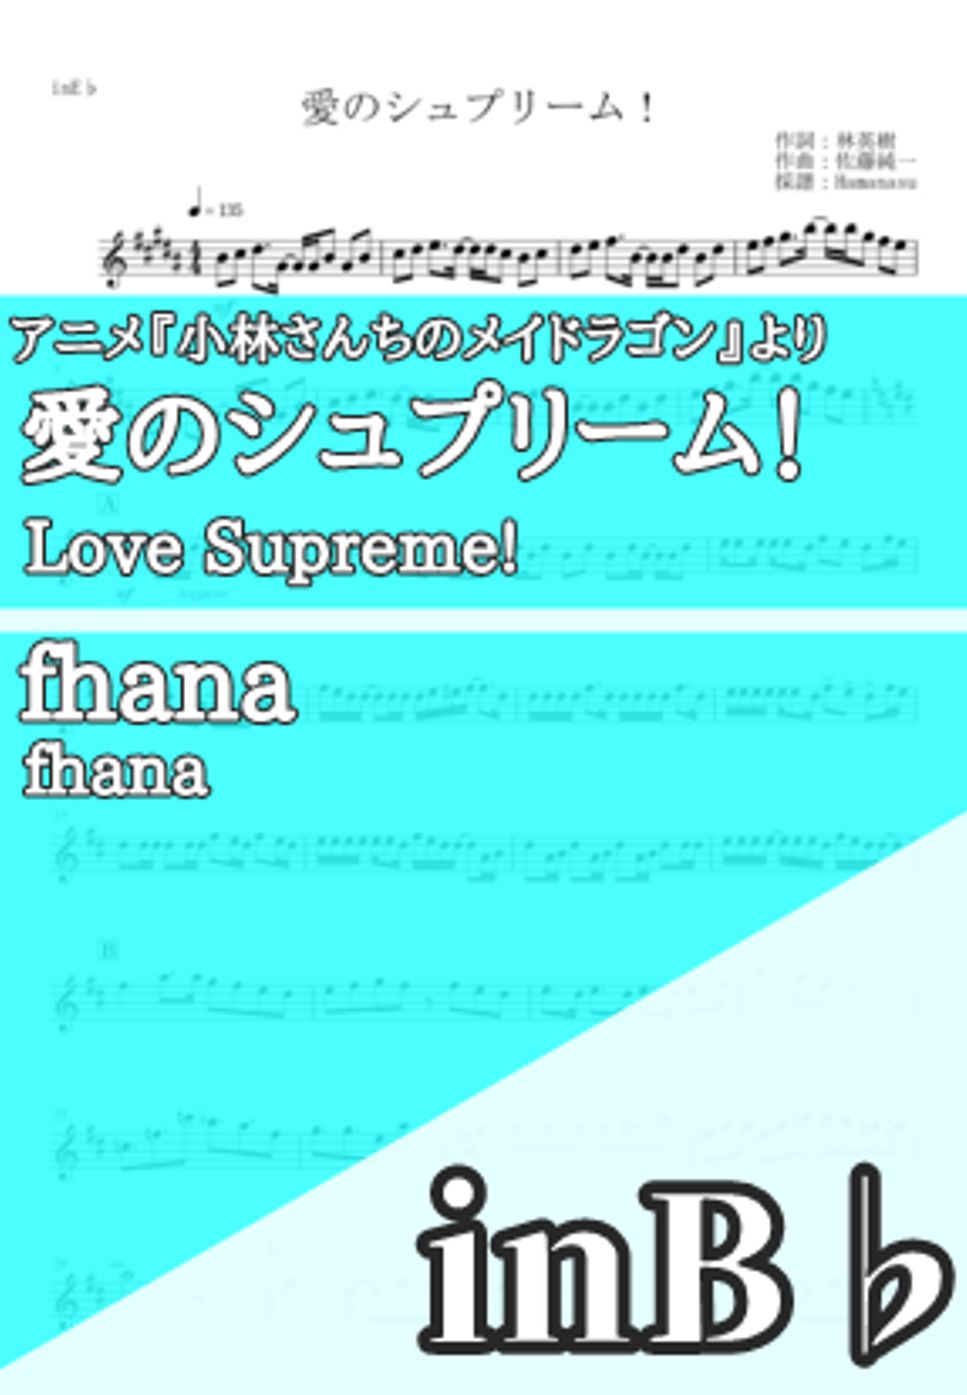 fhana - Love Supreme! (inB♭) by Hamanasu